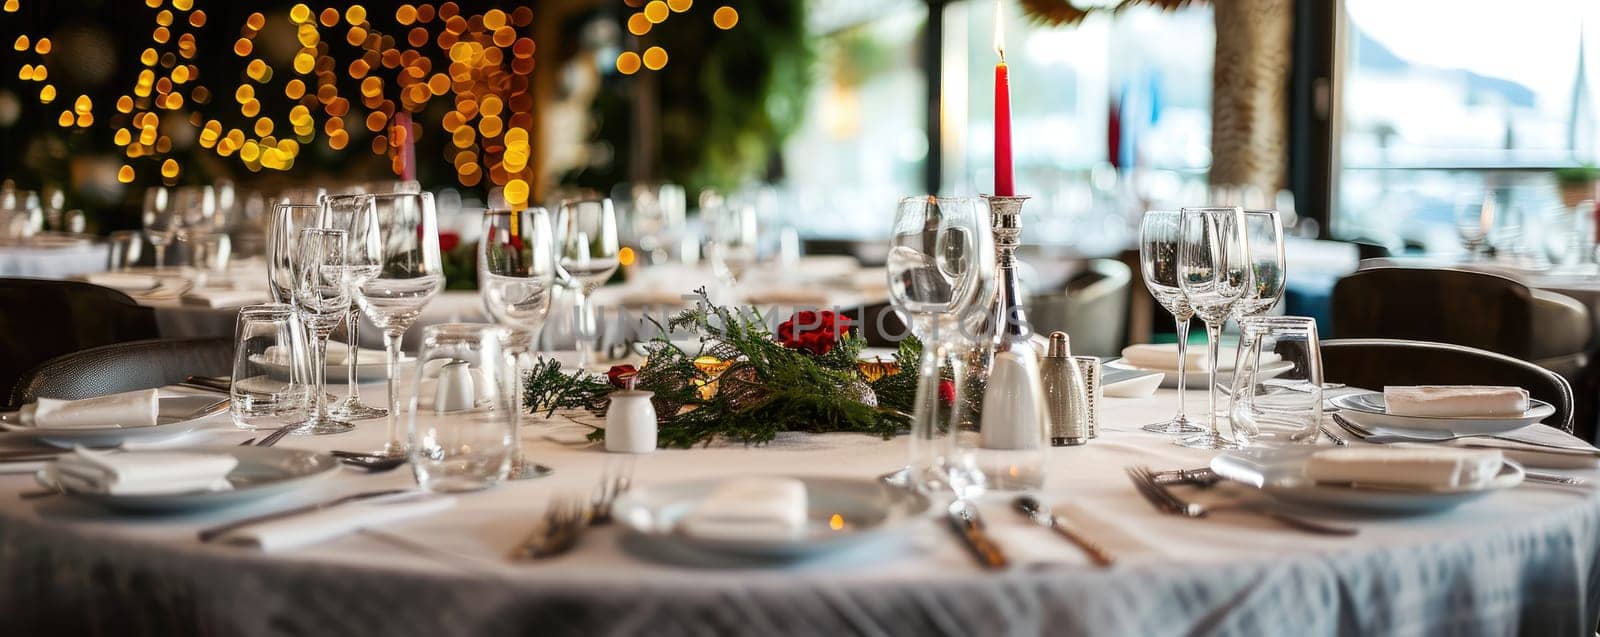 Festive table setting in a gourmet restaurant hall.